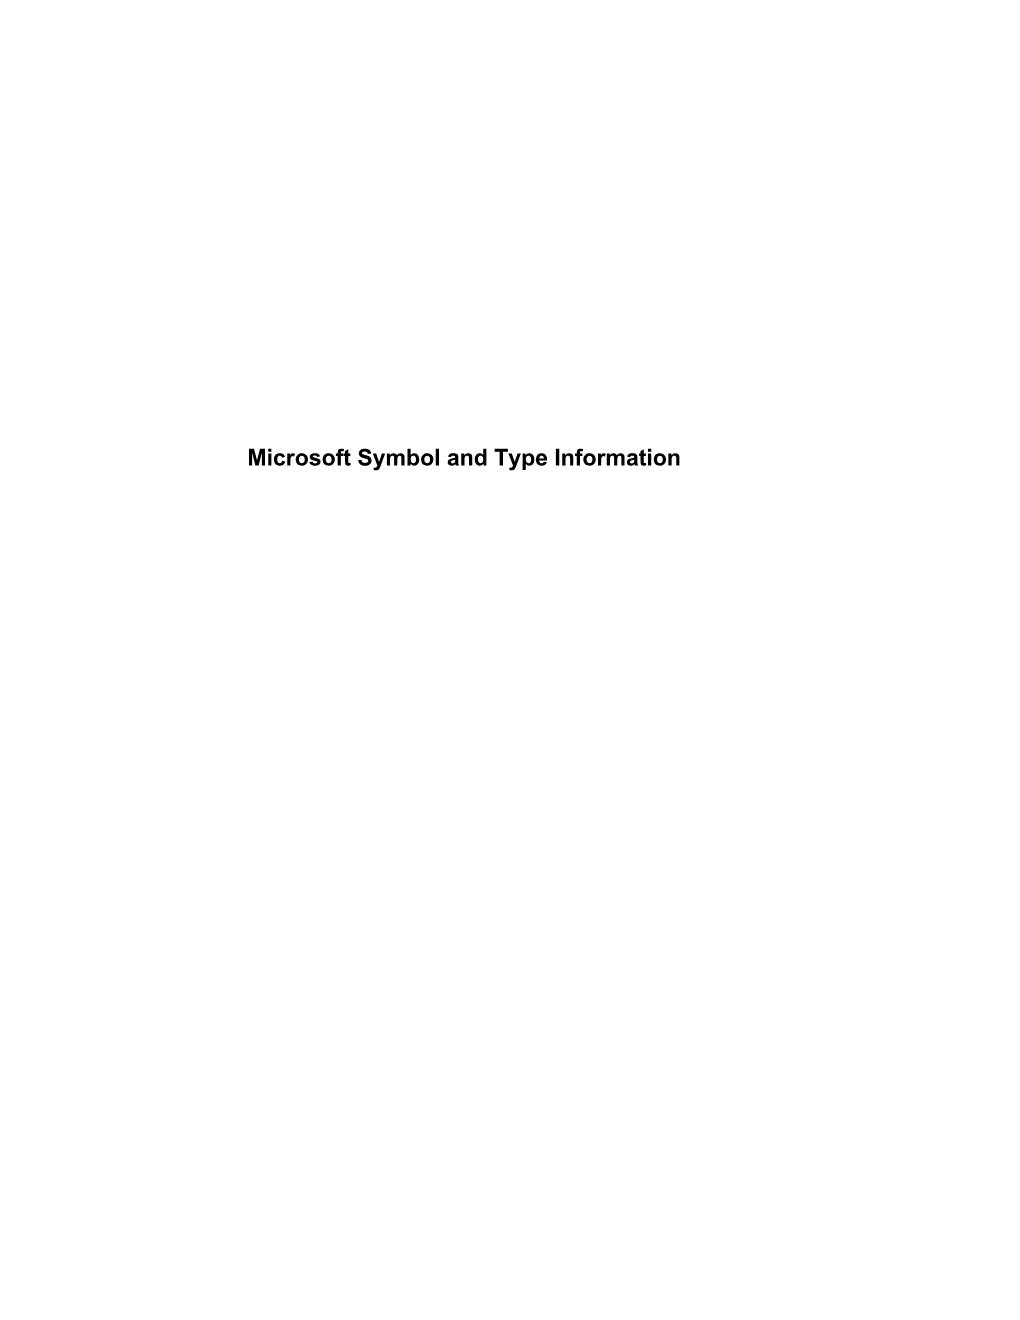 Microsoft Symbol and Type Information Microsoft Symbol and Type Information